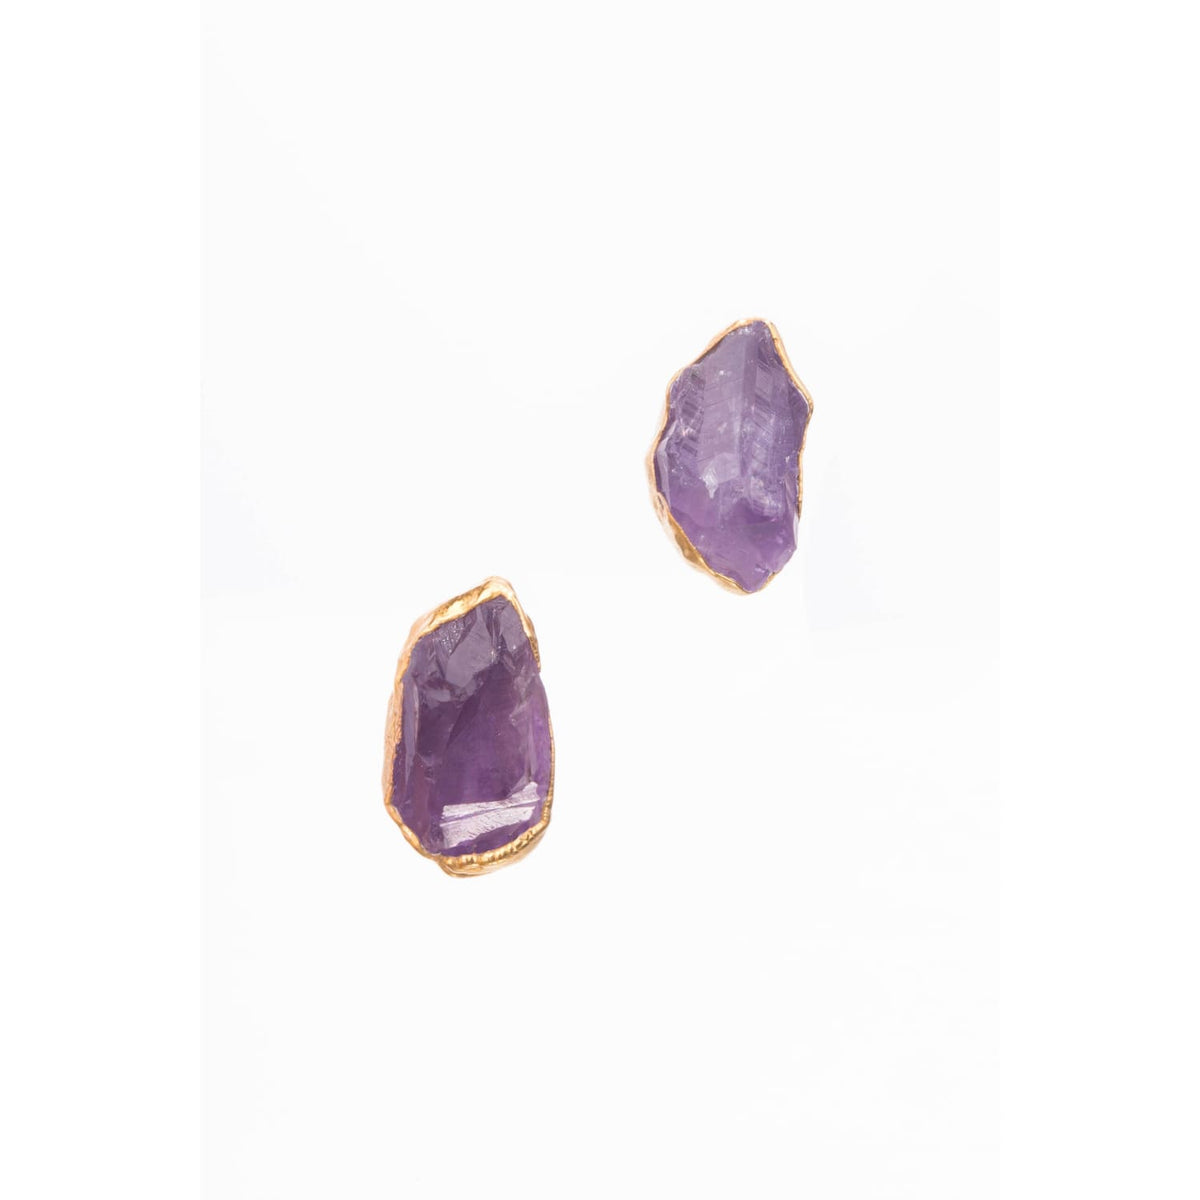 Large Raw Amethyst Stud Earring Gemstone Jewelry Rough